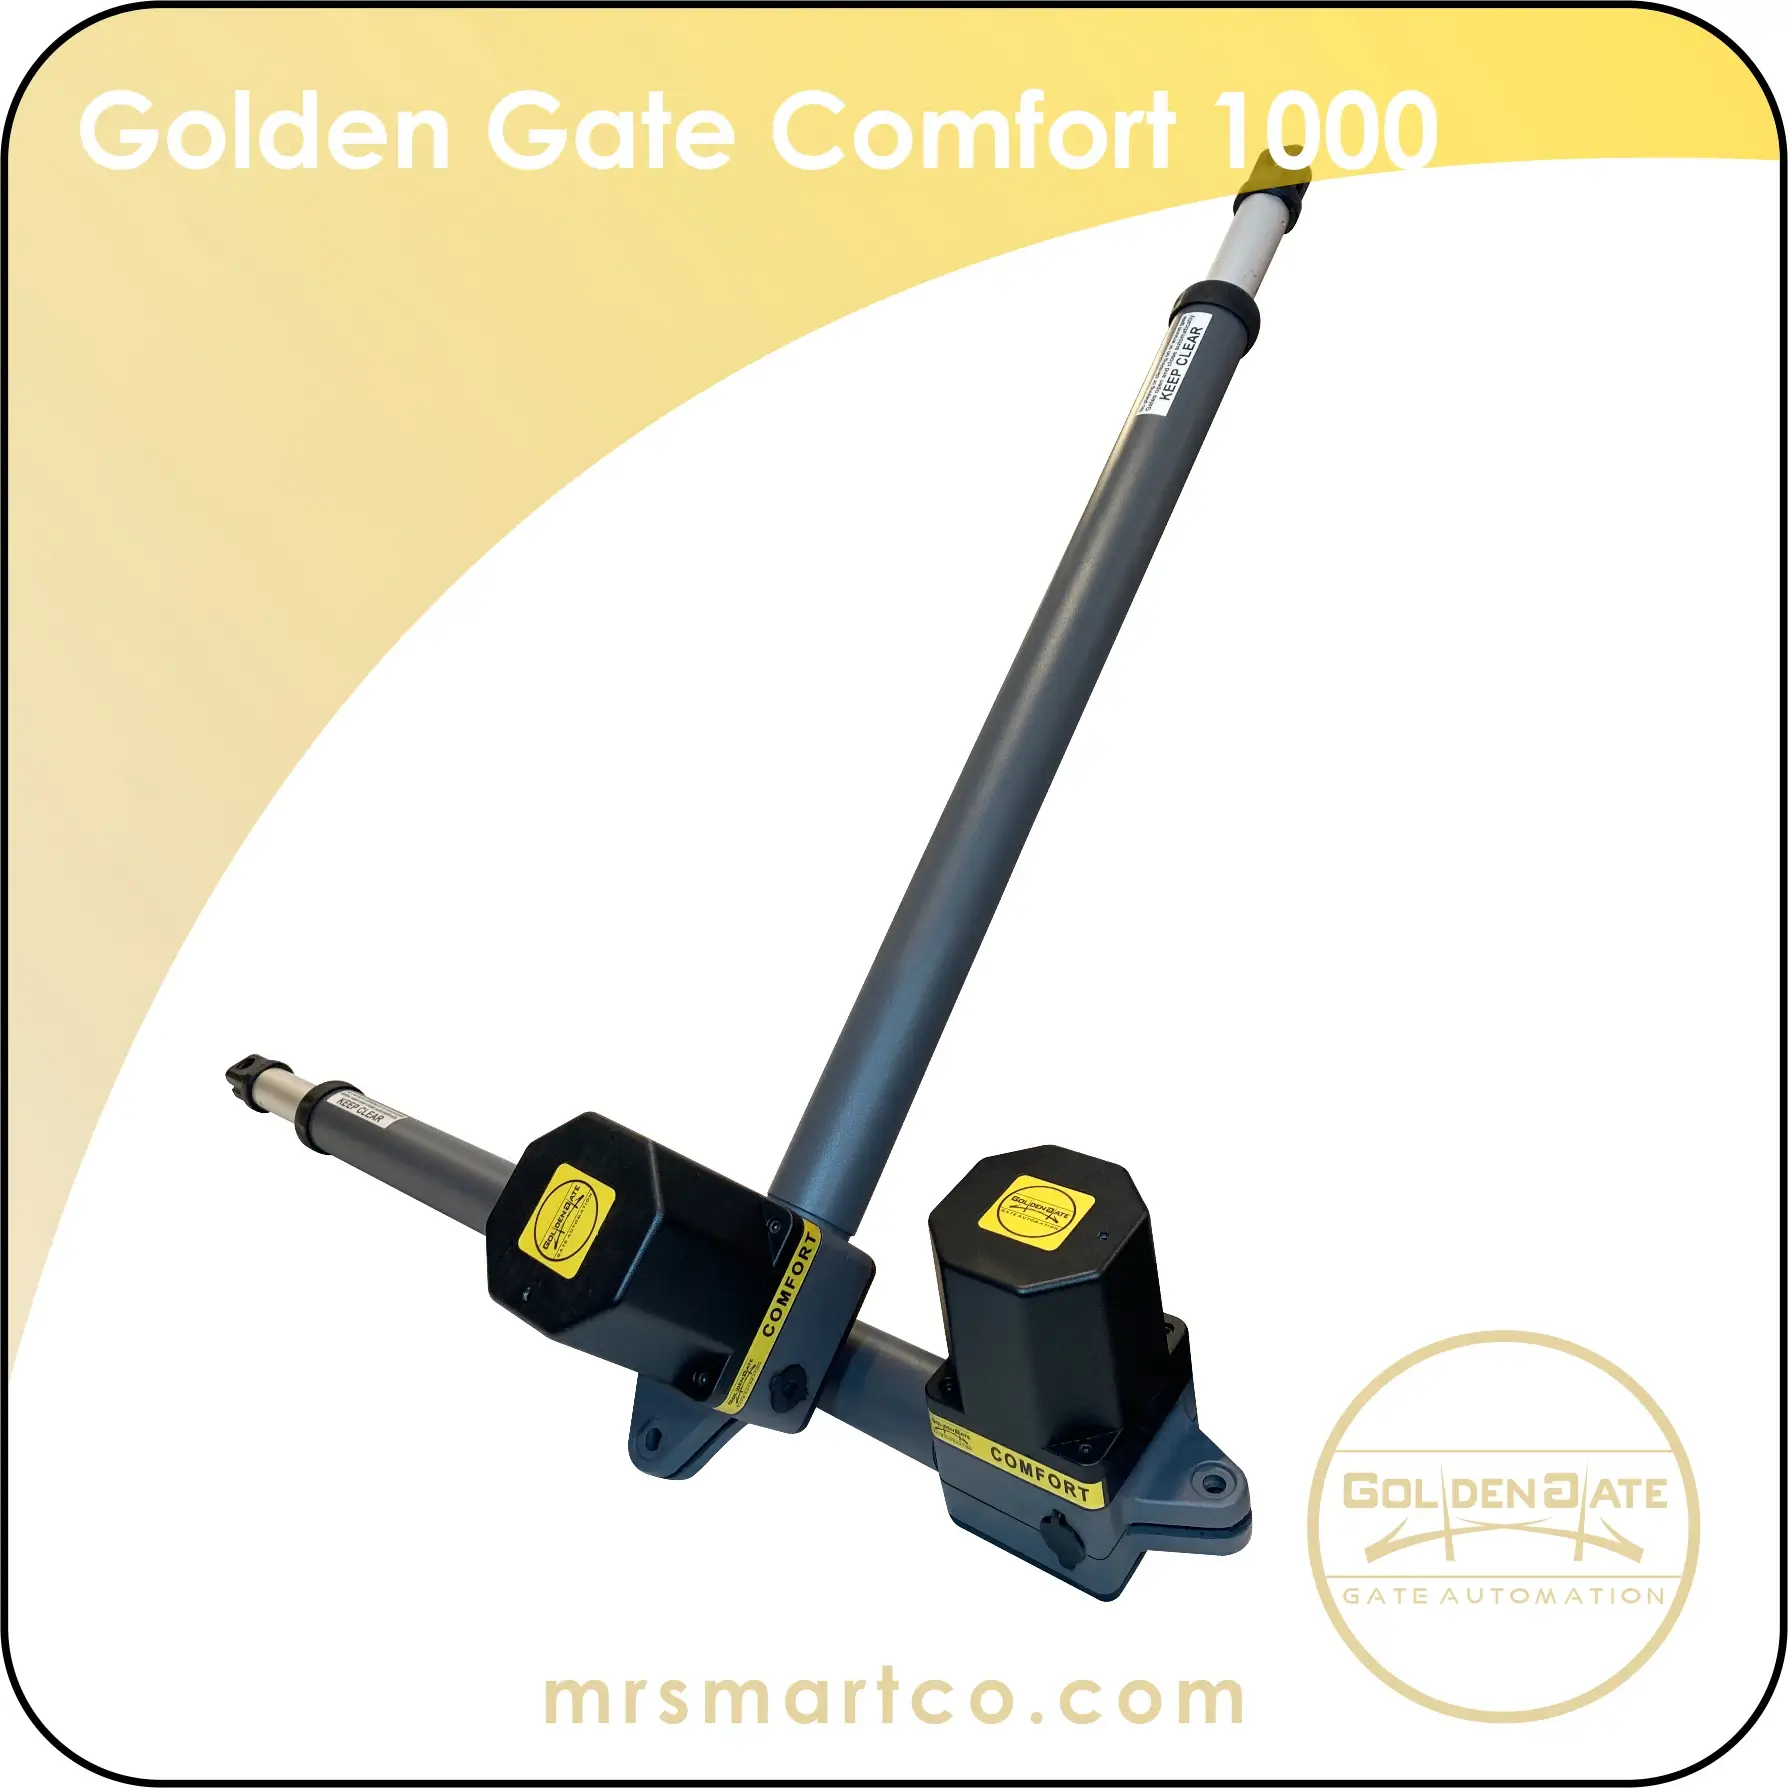 0012679_golden-gate-comfort-1000